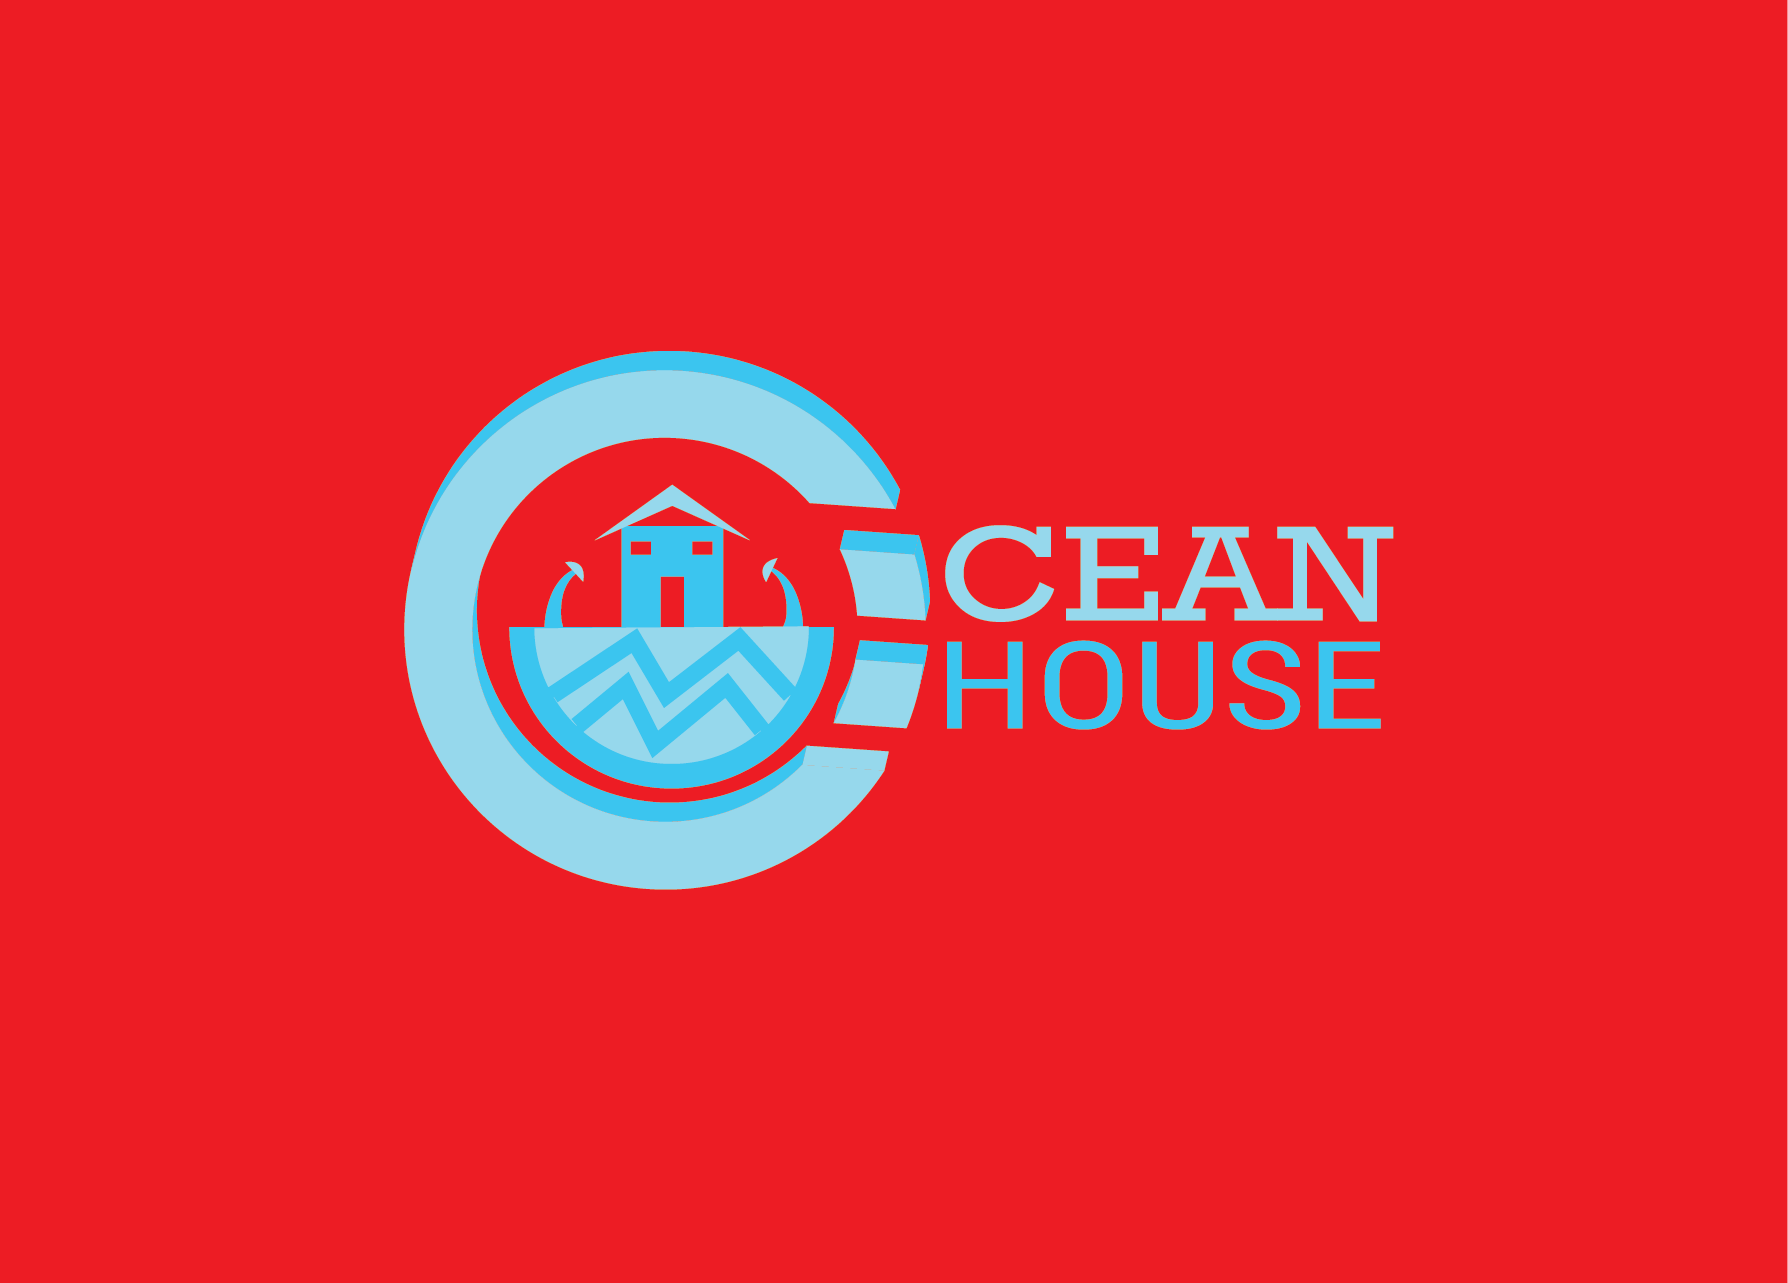 Red and Blue House Logo - abstract Ocean House logo design - Design Ideas